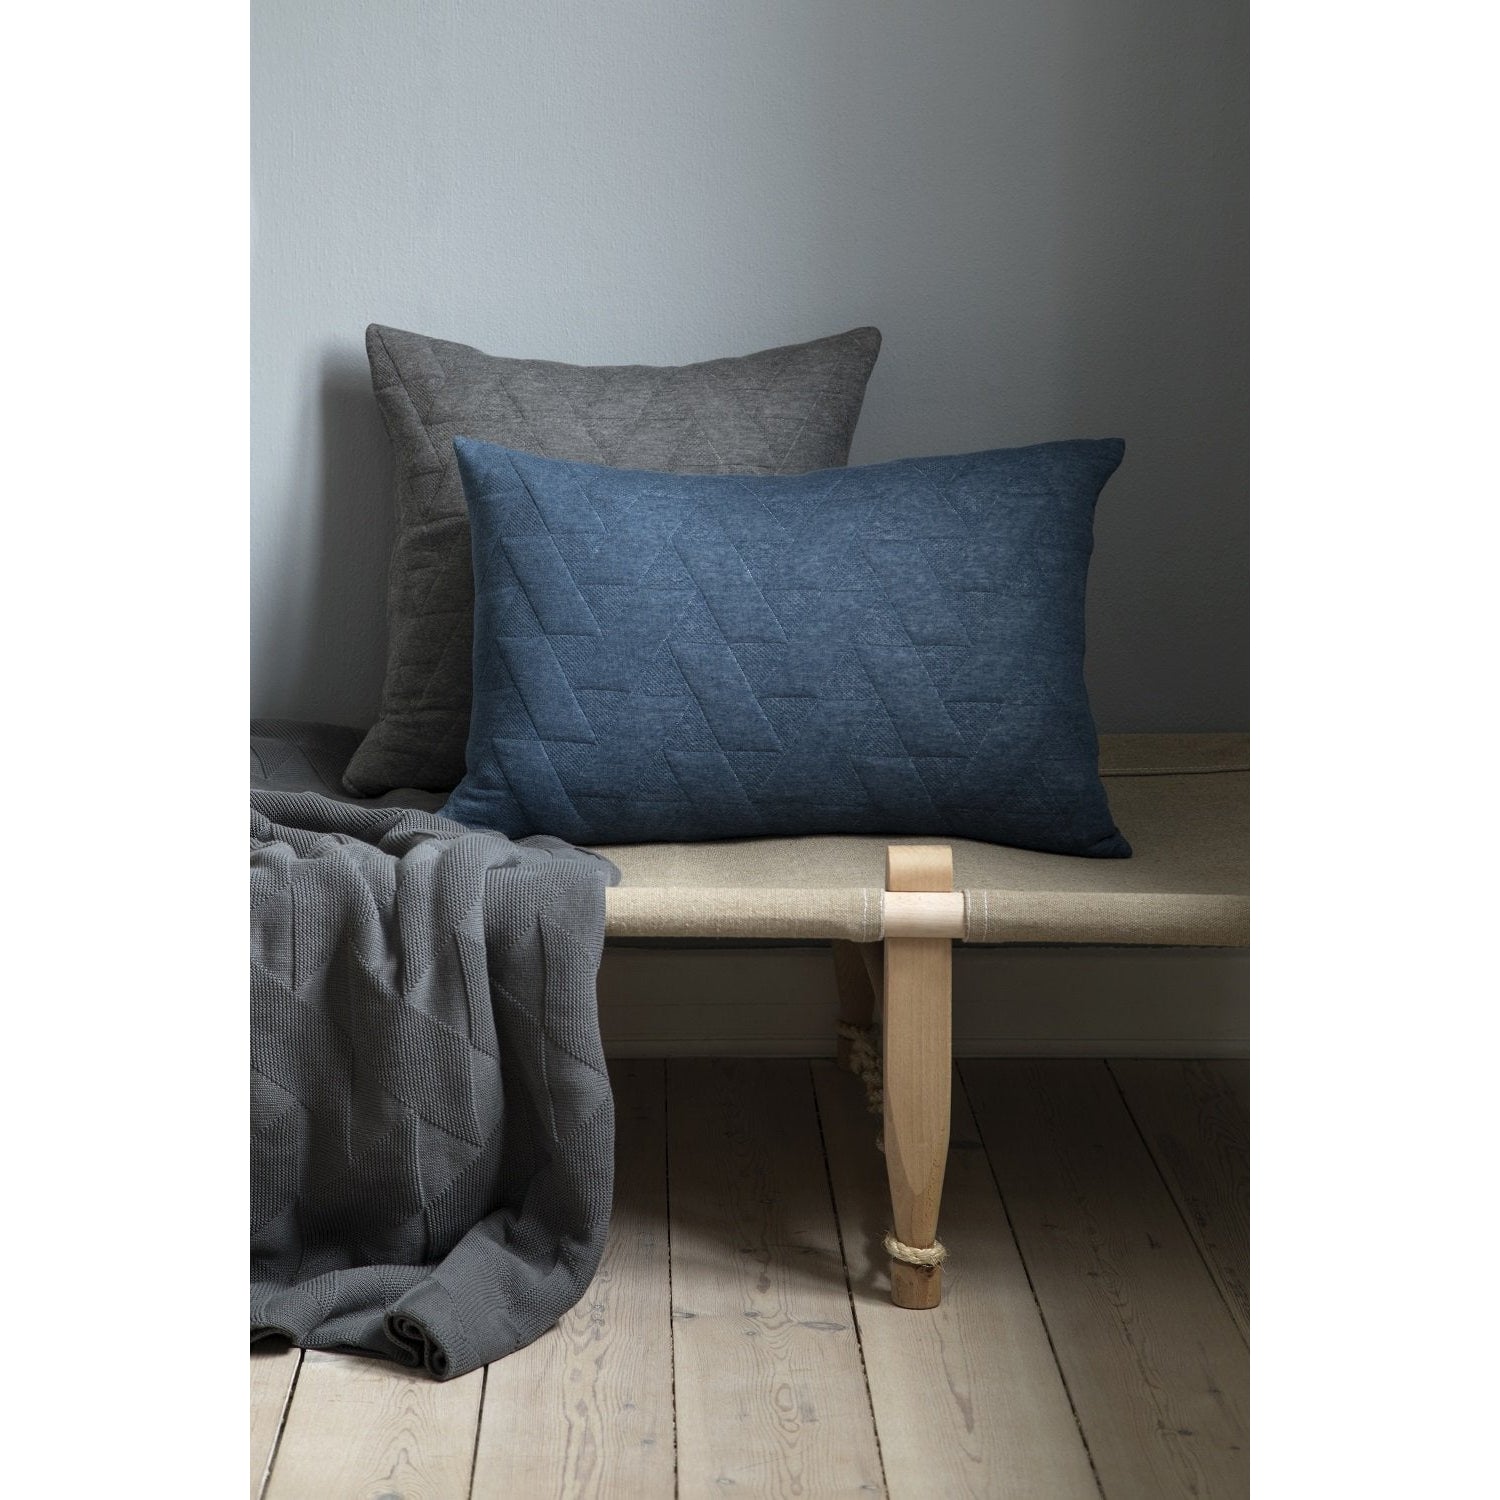 Cushion de patrón Finn Juhl de Architectmade, gris